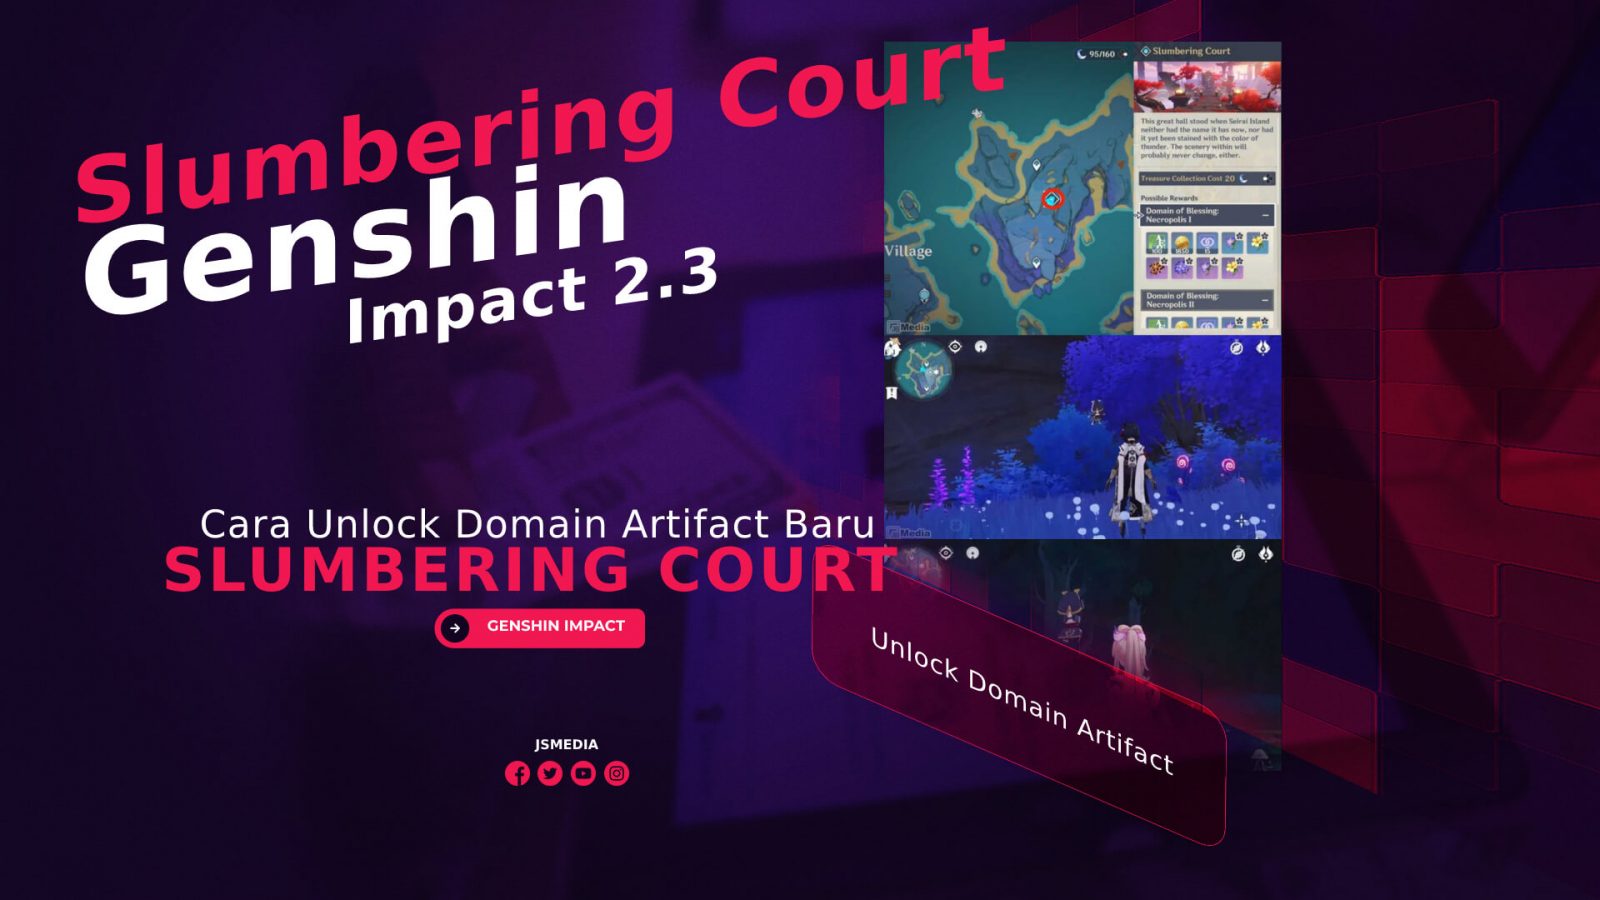 Cara Unlock Domain Artifact Baru Slumbering Court Genshin Impact 2.3